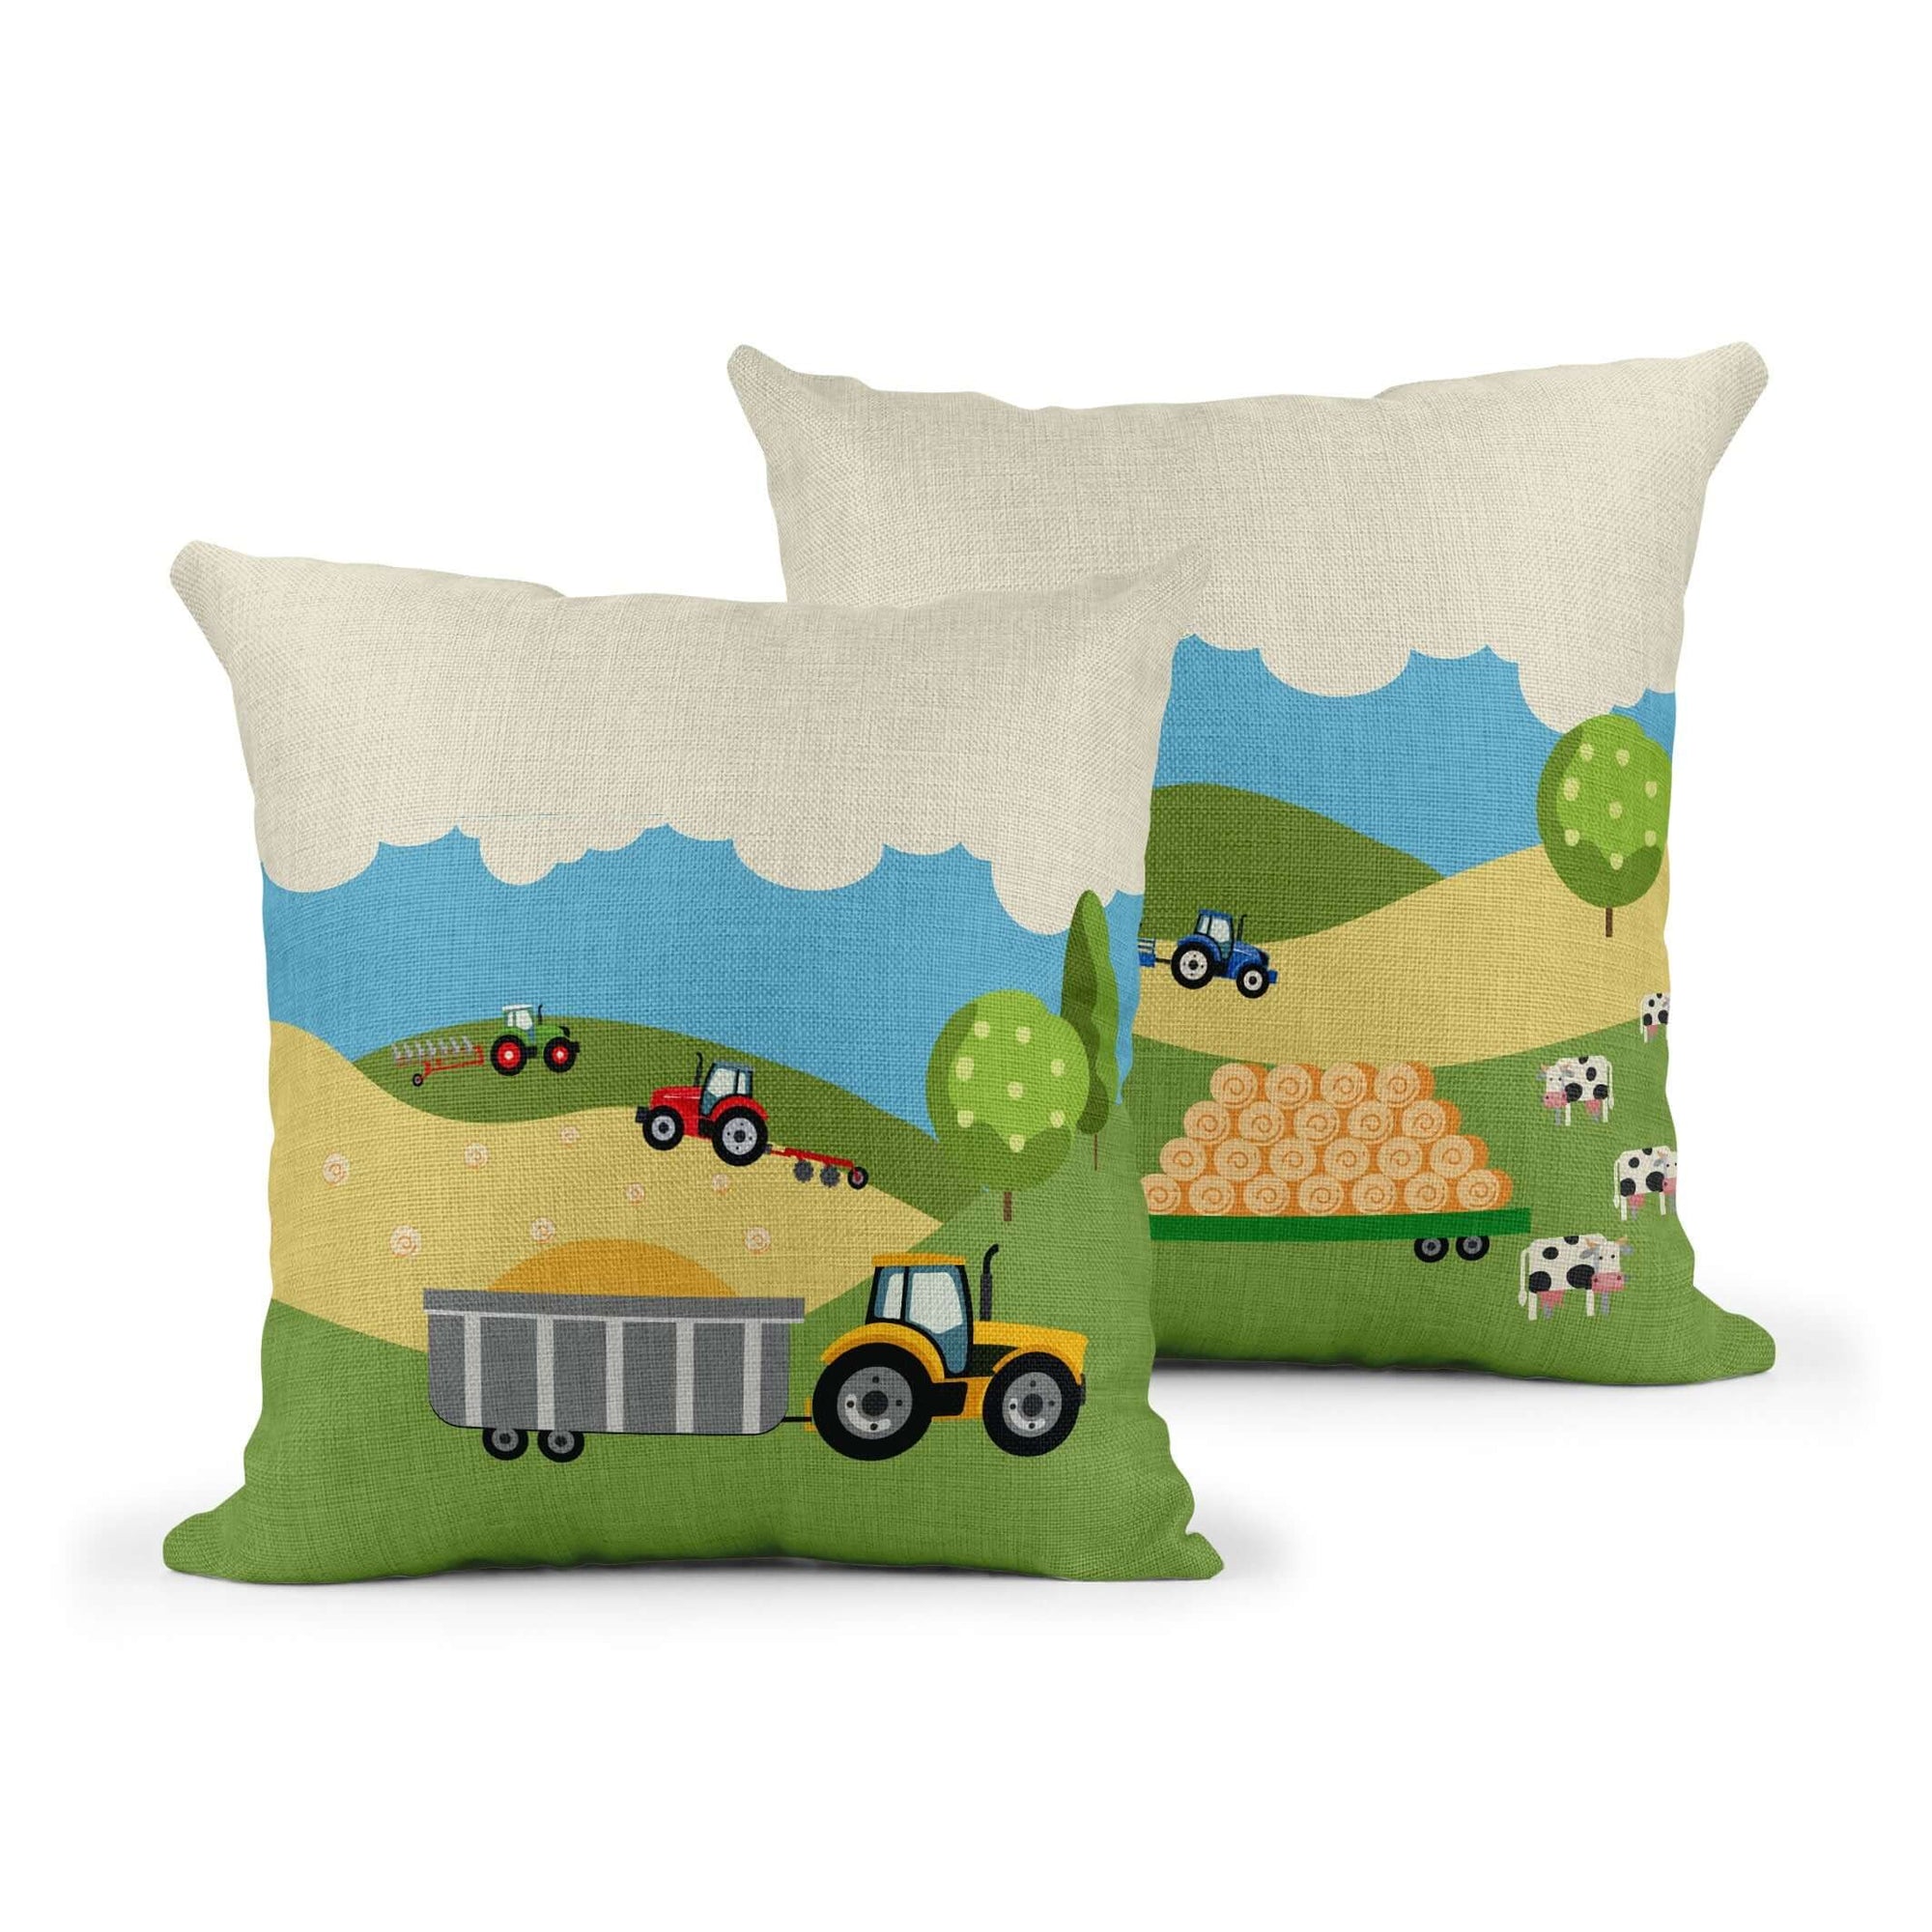 Bramble Hill Farm Cushion Cushions Mustard and Gray Ltd Shropshire UK